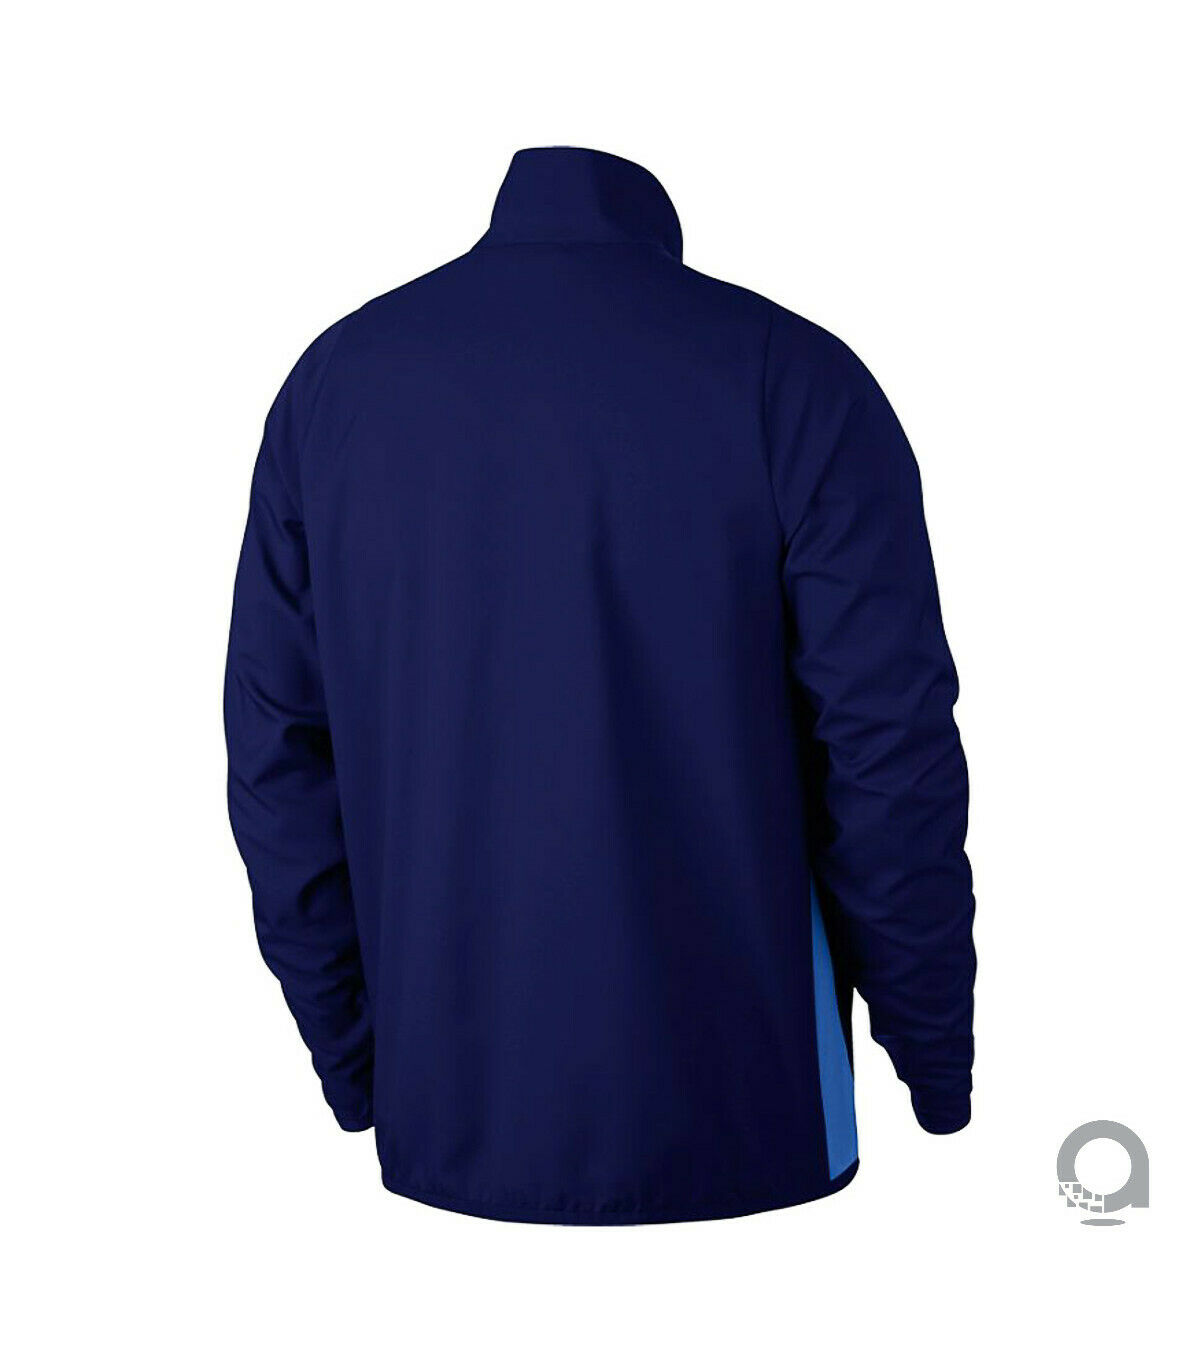 Nike DRY TEAM Woven Men's Training Jacket (Blue) Size 2XL - image 2 of 2